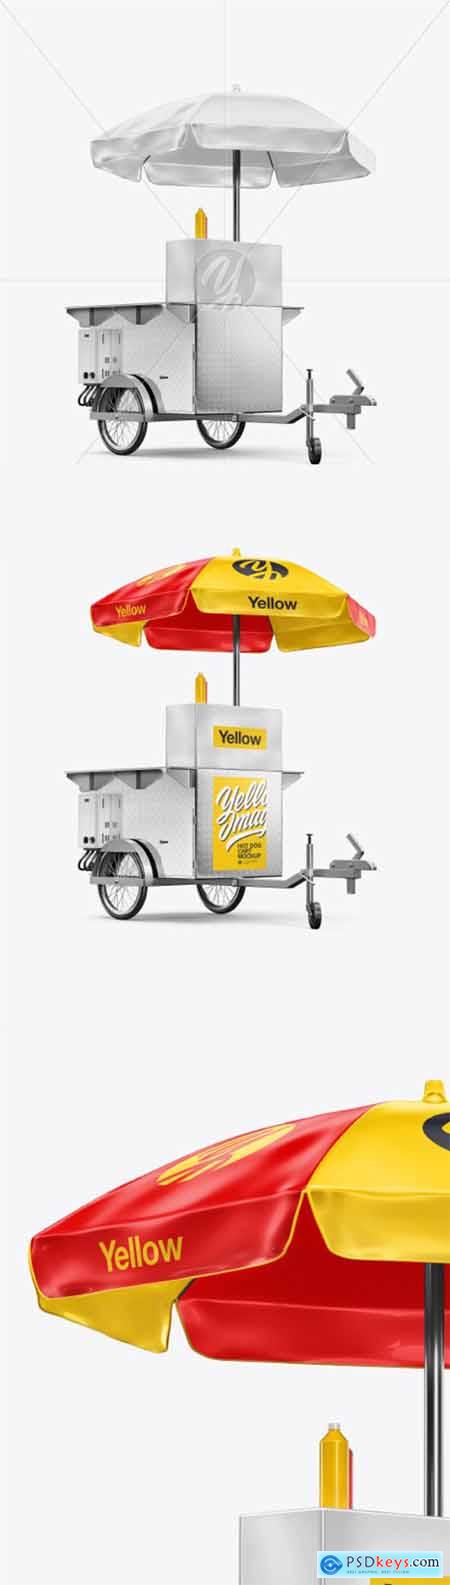 Hot Dog Cart Mockup - Half-Side View 39409